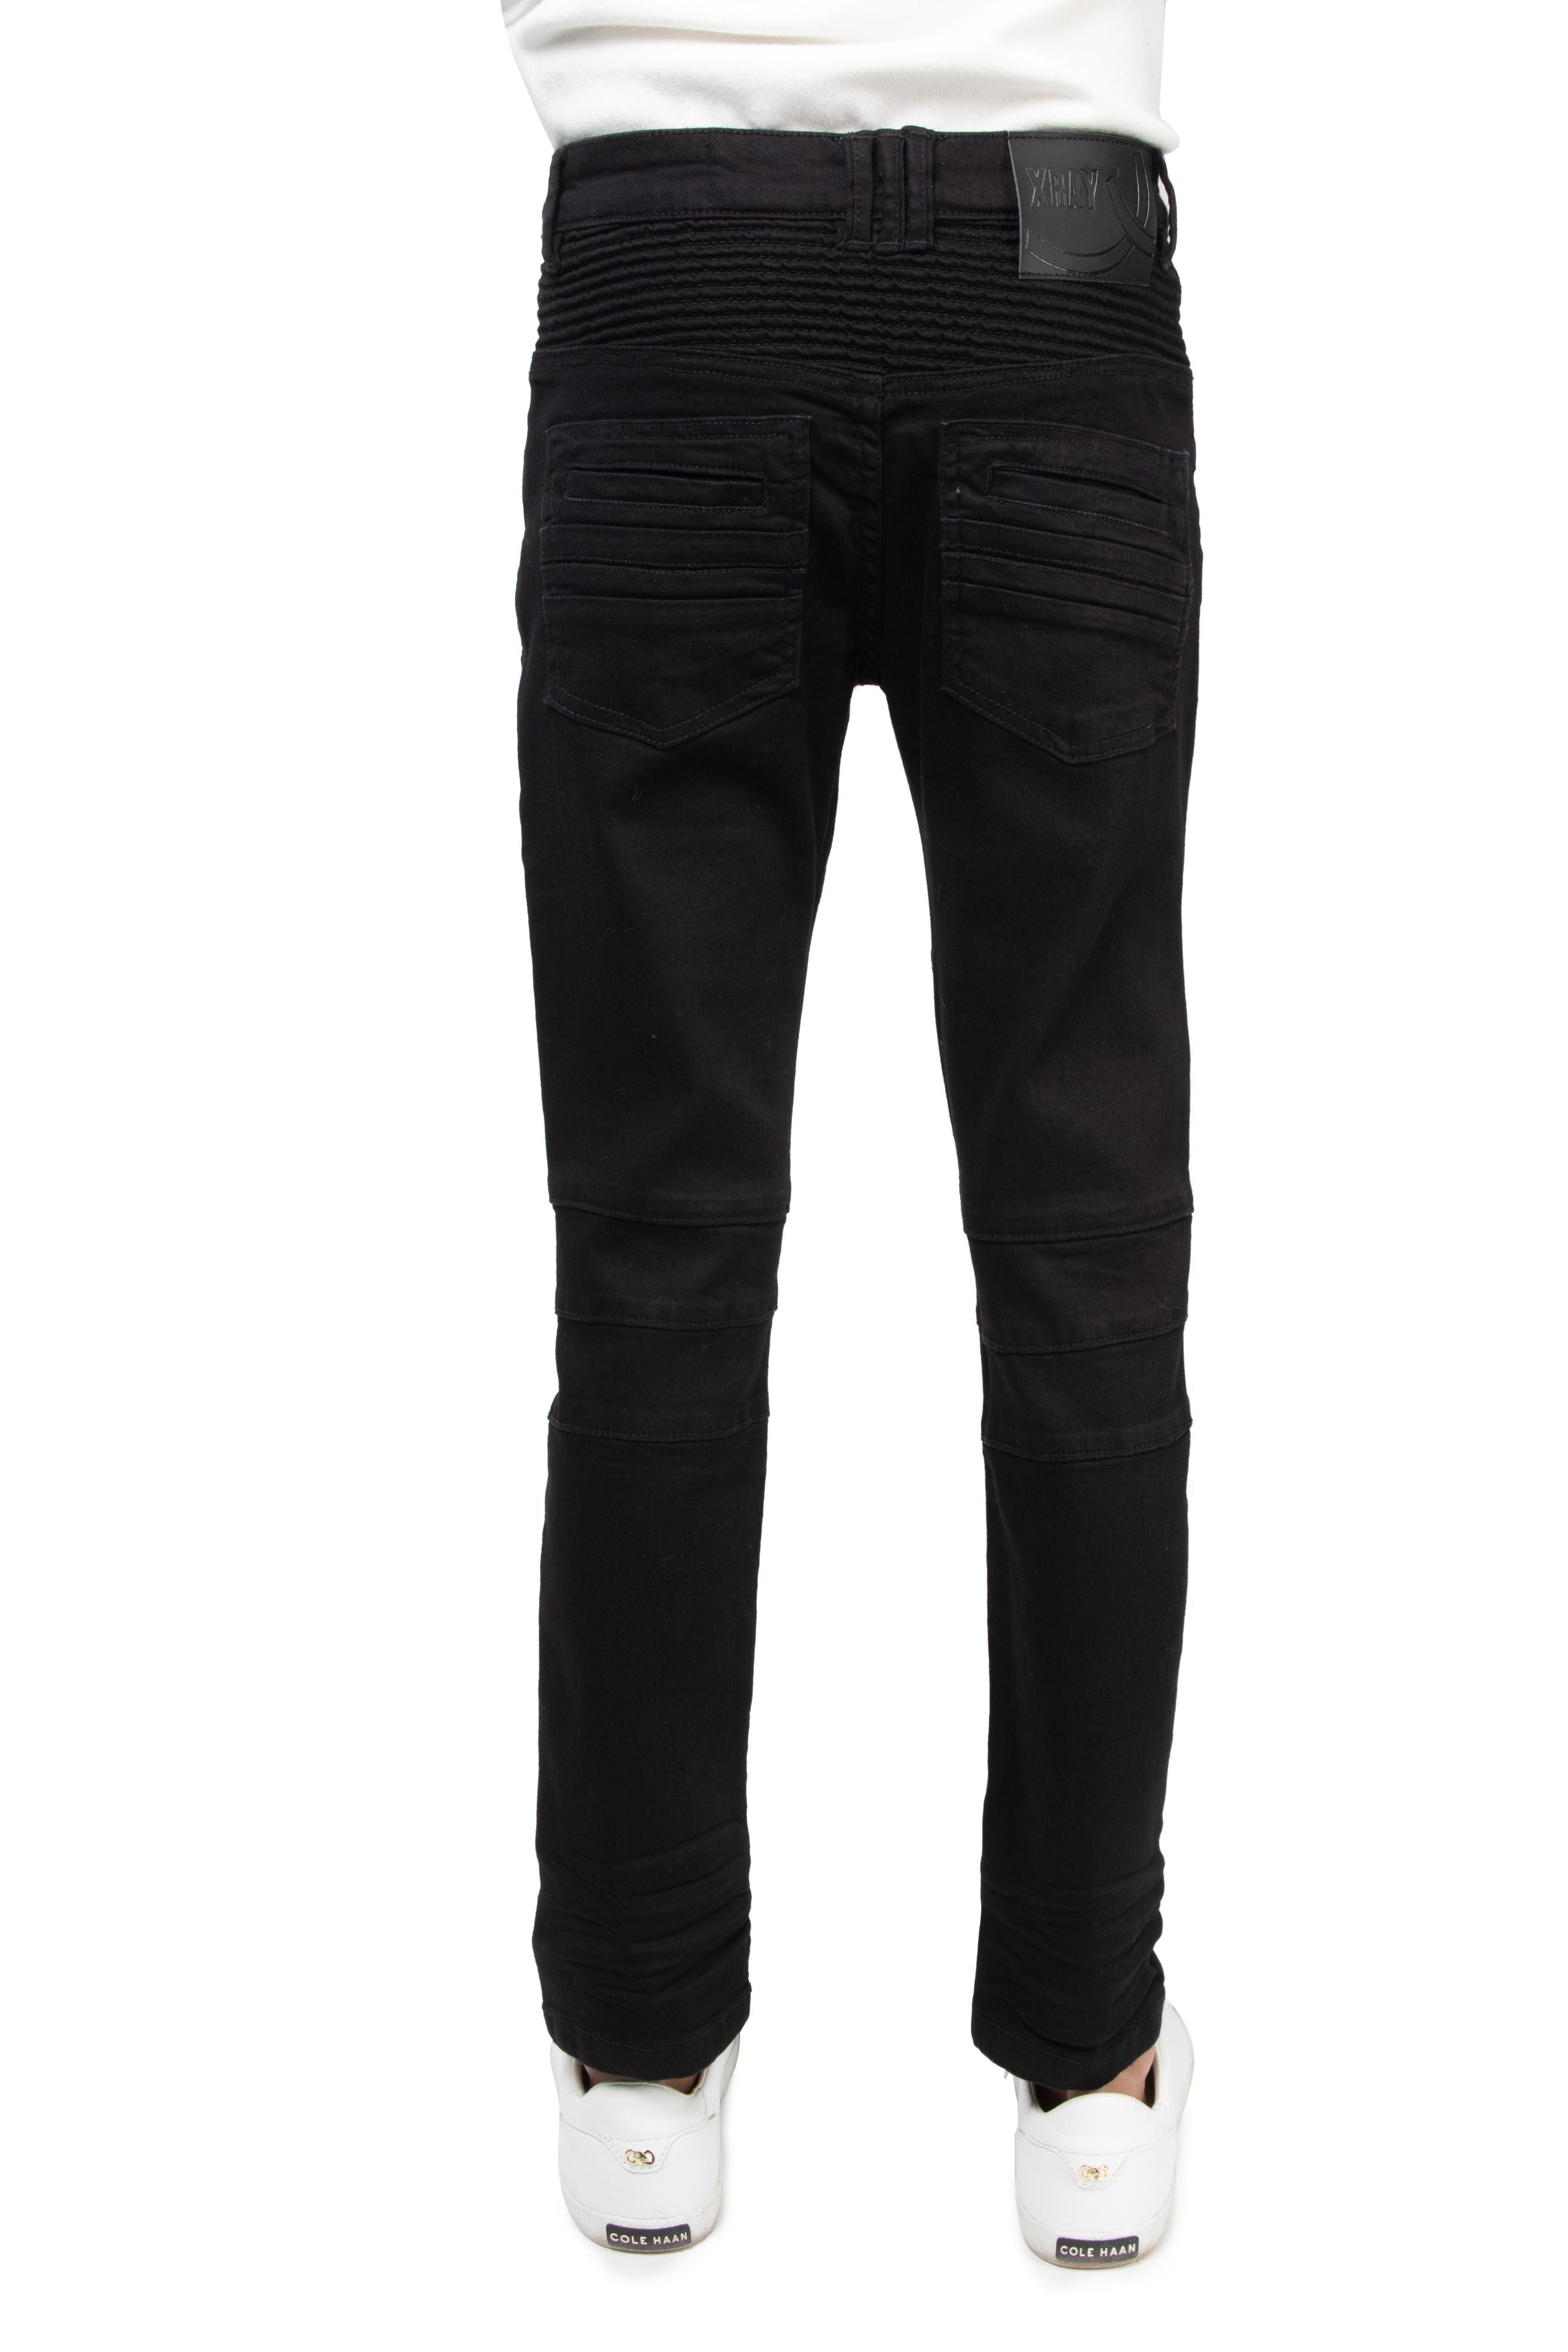 XRay Jeans Boy's Slim Fit Distressed Stitched Biker Pants – X-RAY JEANS